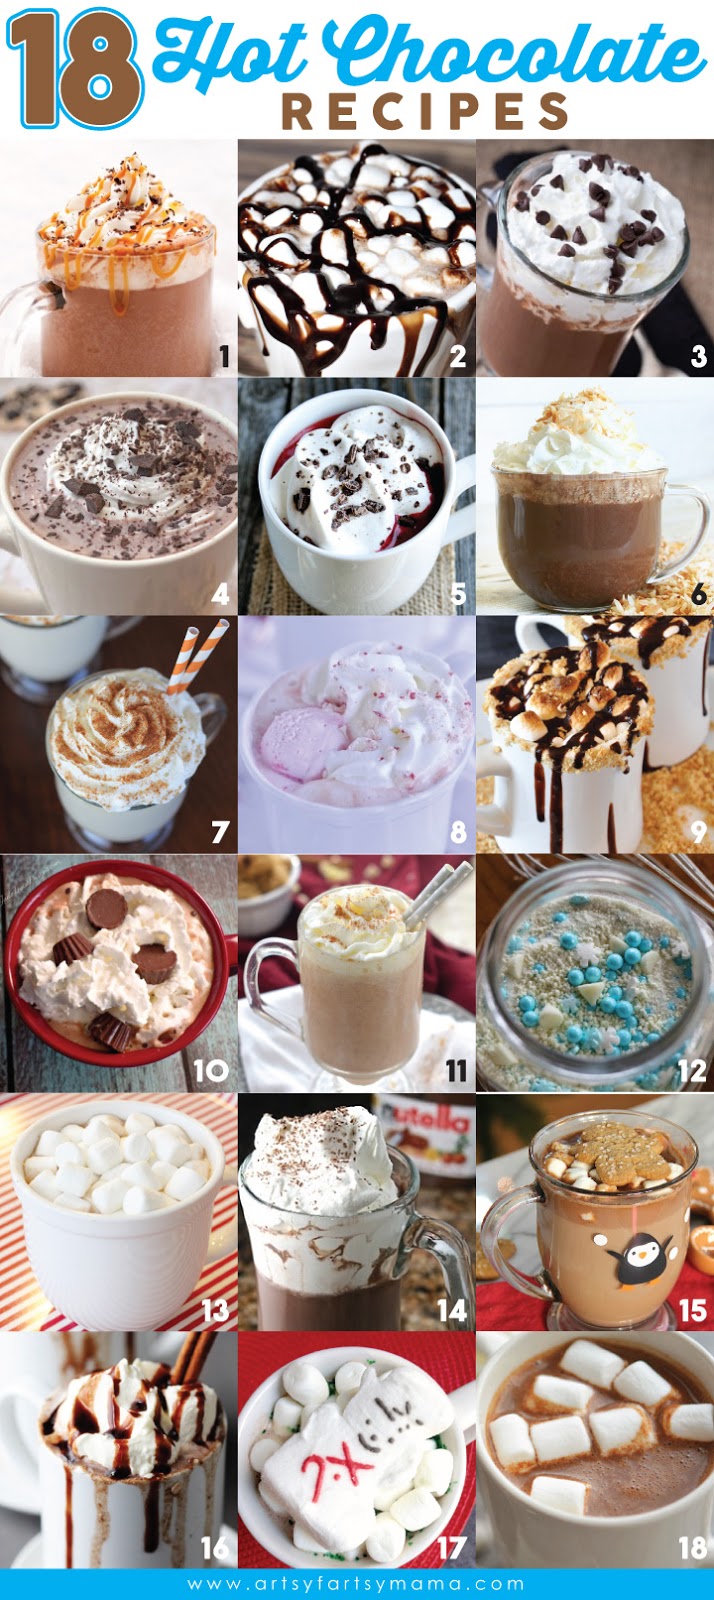 18 Hot Chocolate Recipes at artsyfartsymama.com